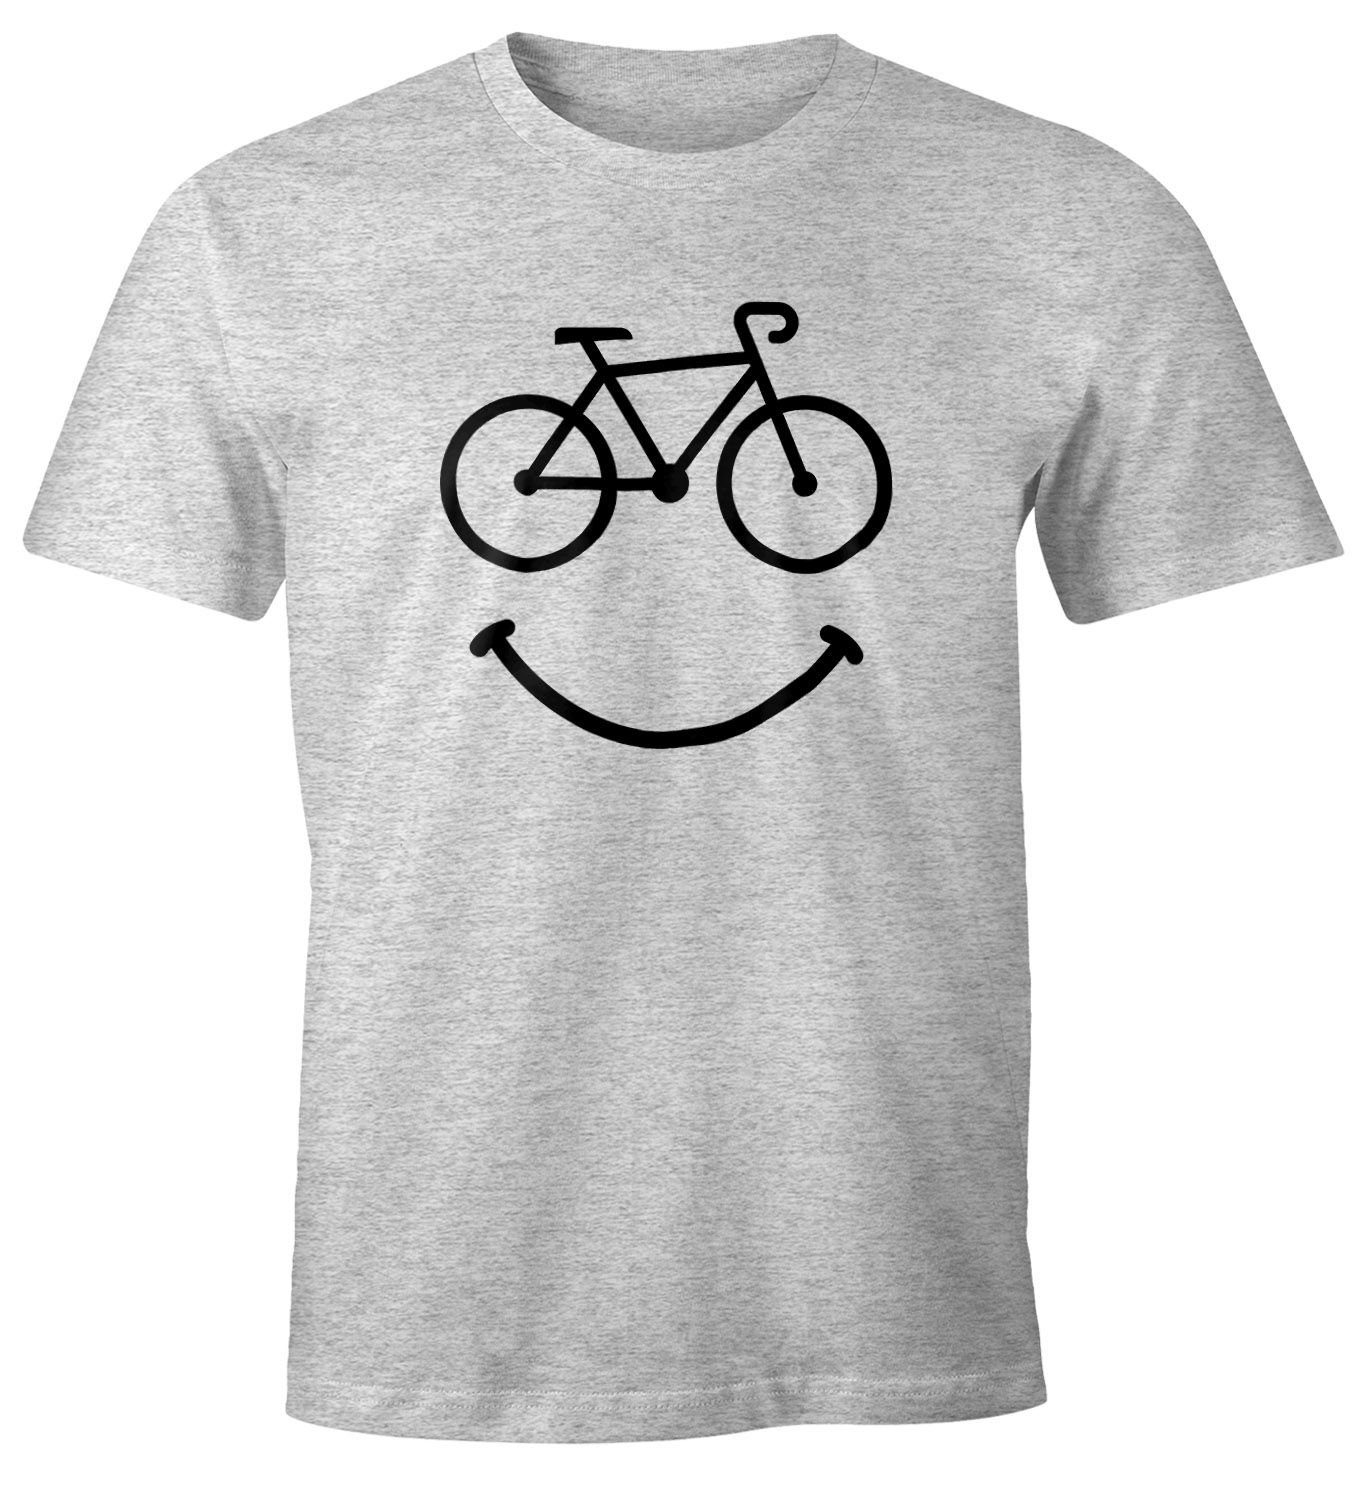 MoonWorks Print-Shirt Fahrrad Herren T-Shirt Smile Happy Bike Radfahren Fun-Shirt Moonworks® mit Print grau